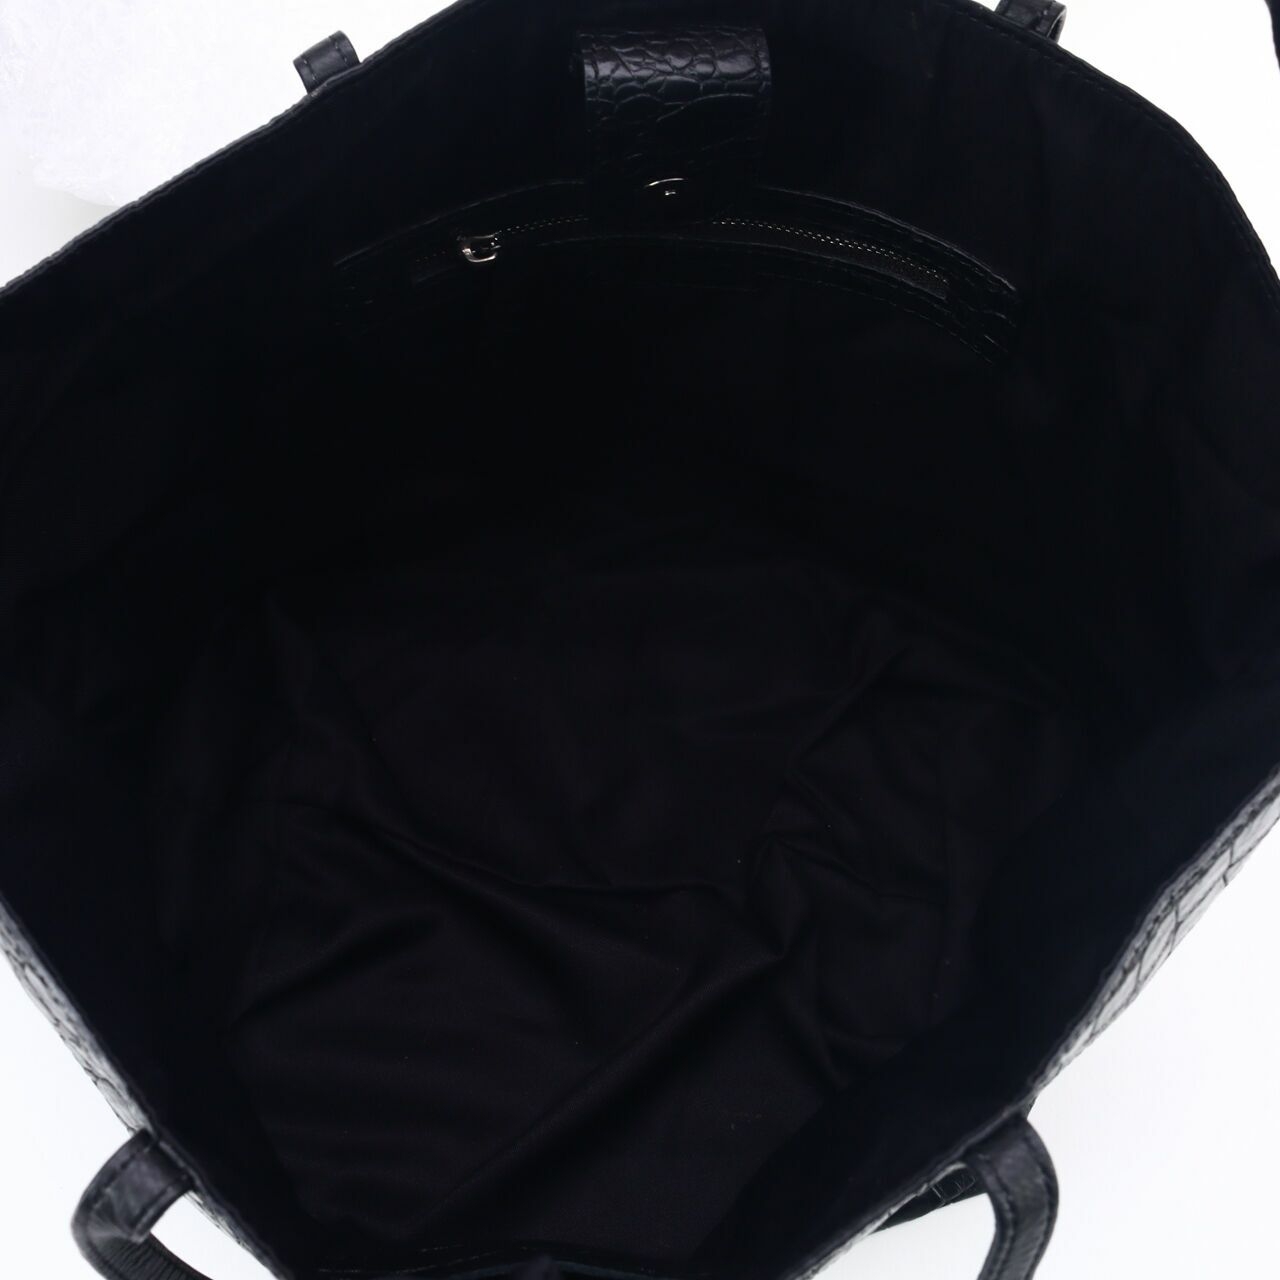 Kaynn Black Tote Bag